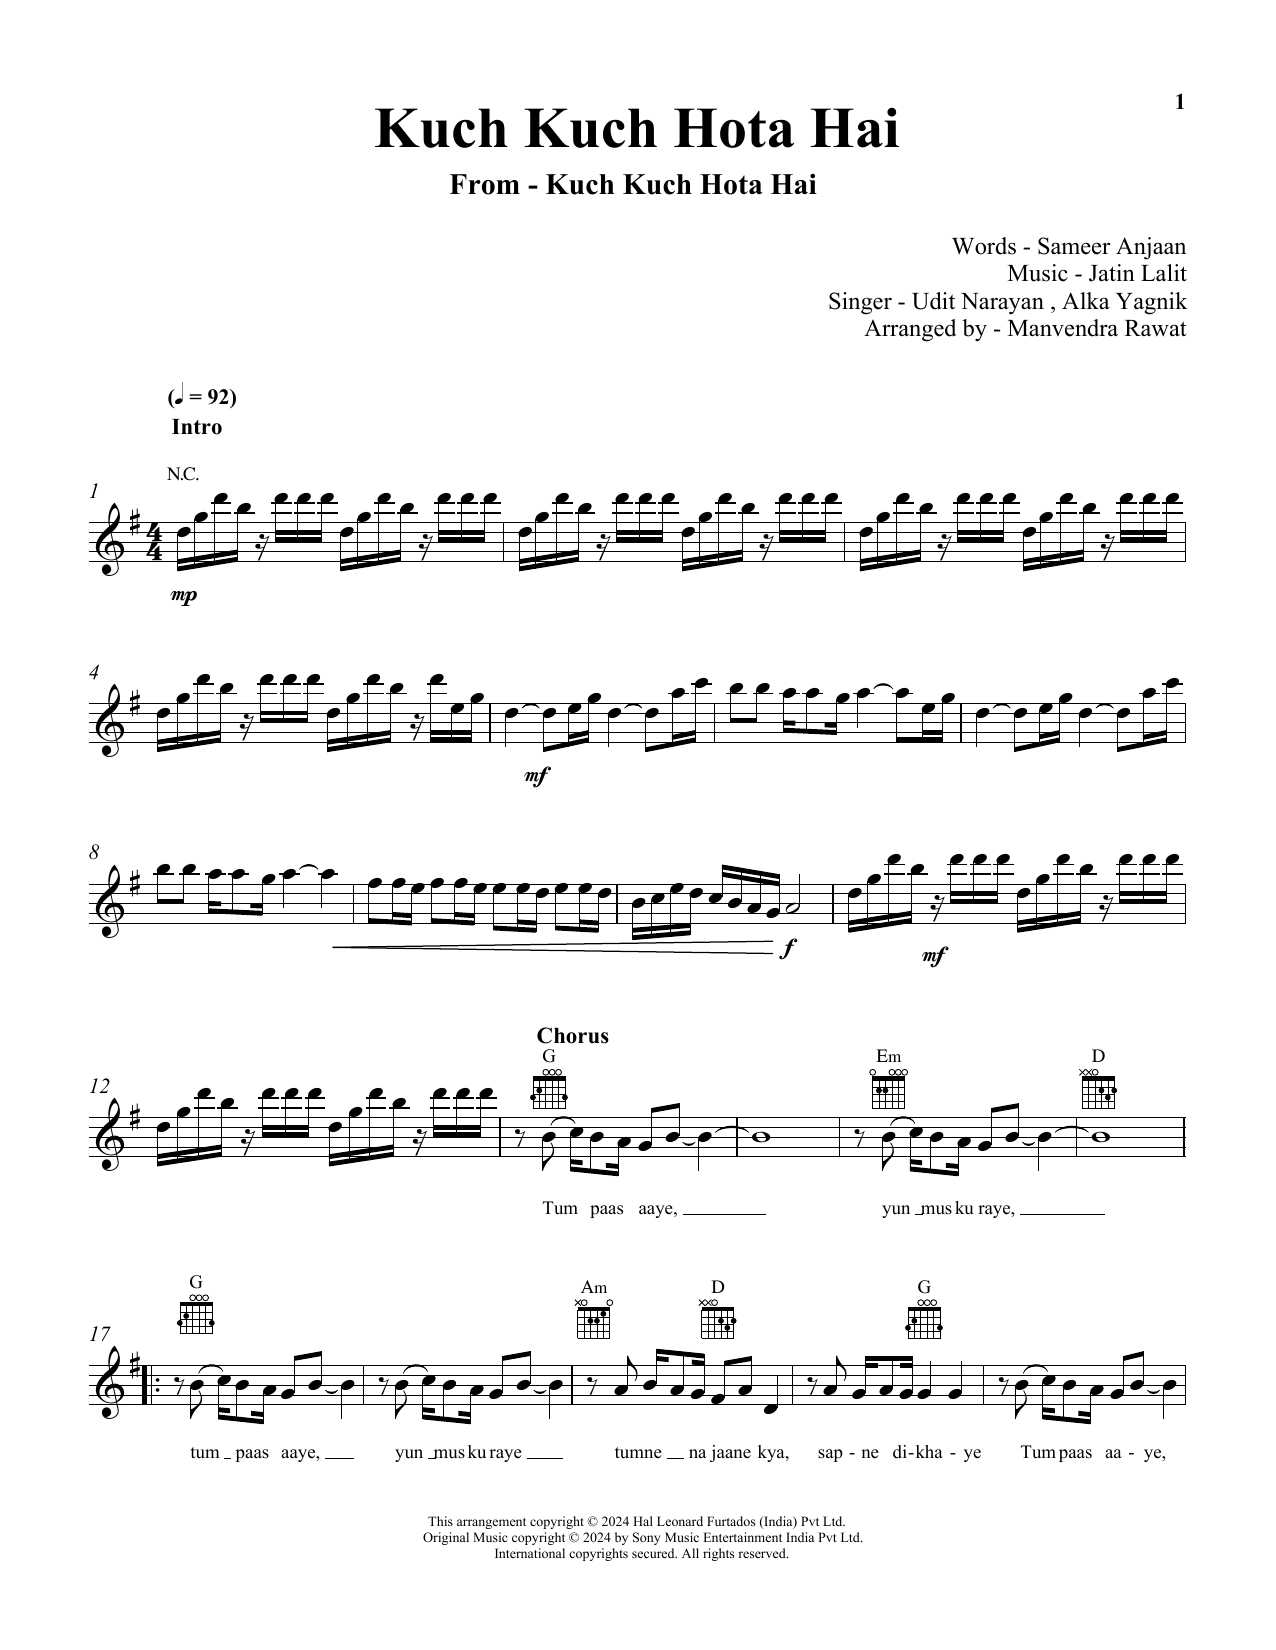 Udit Narayan & Alka Yagnik Kuch Kuch Hota Hai Sheet Music Notes & Chords for Lead Sheet / Fake Book - Download or Print PDF